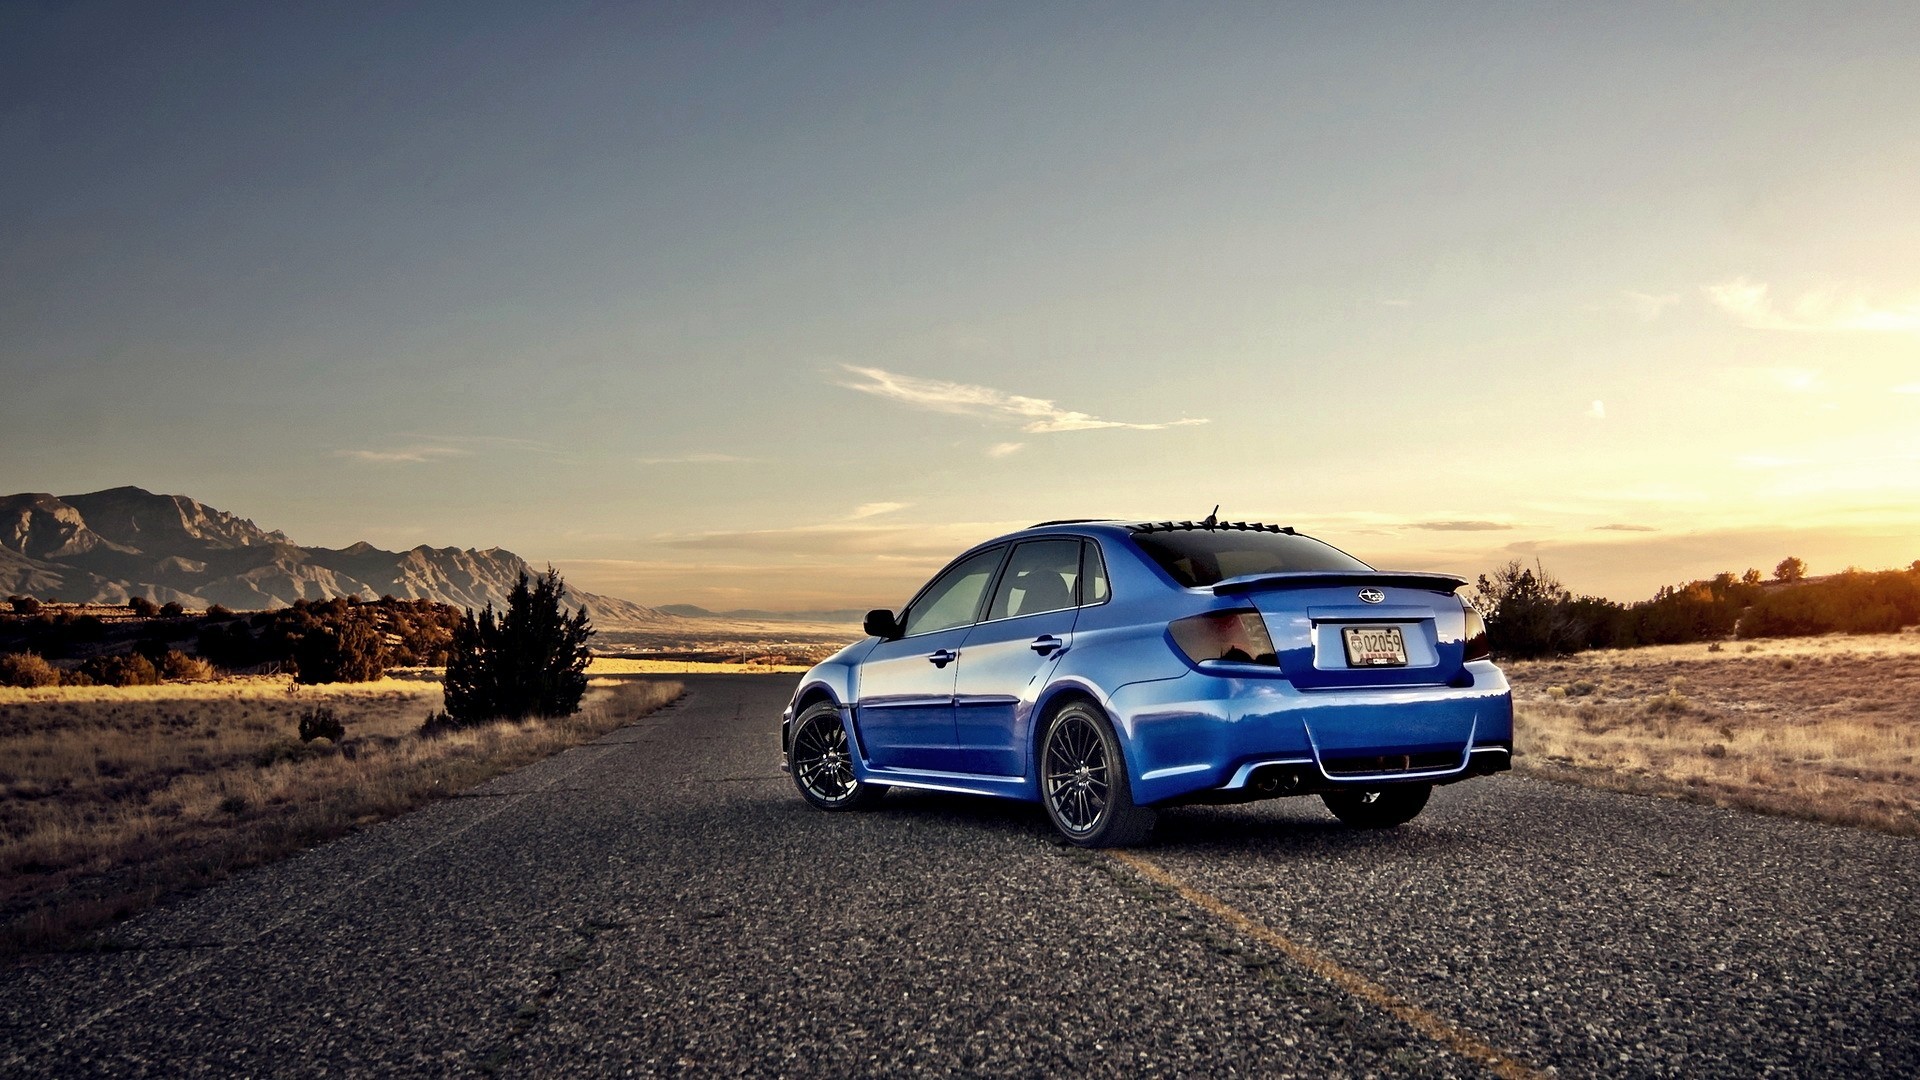 Subaru Impreza Backround For Mac